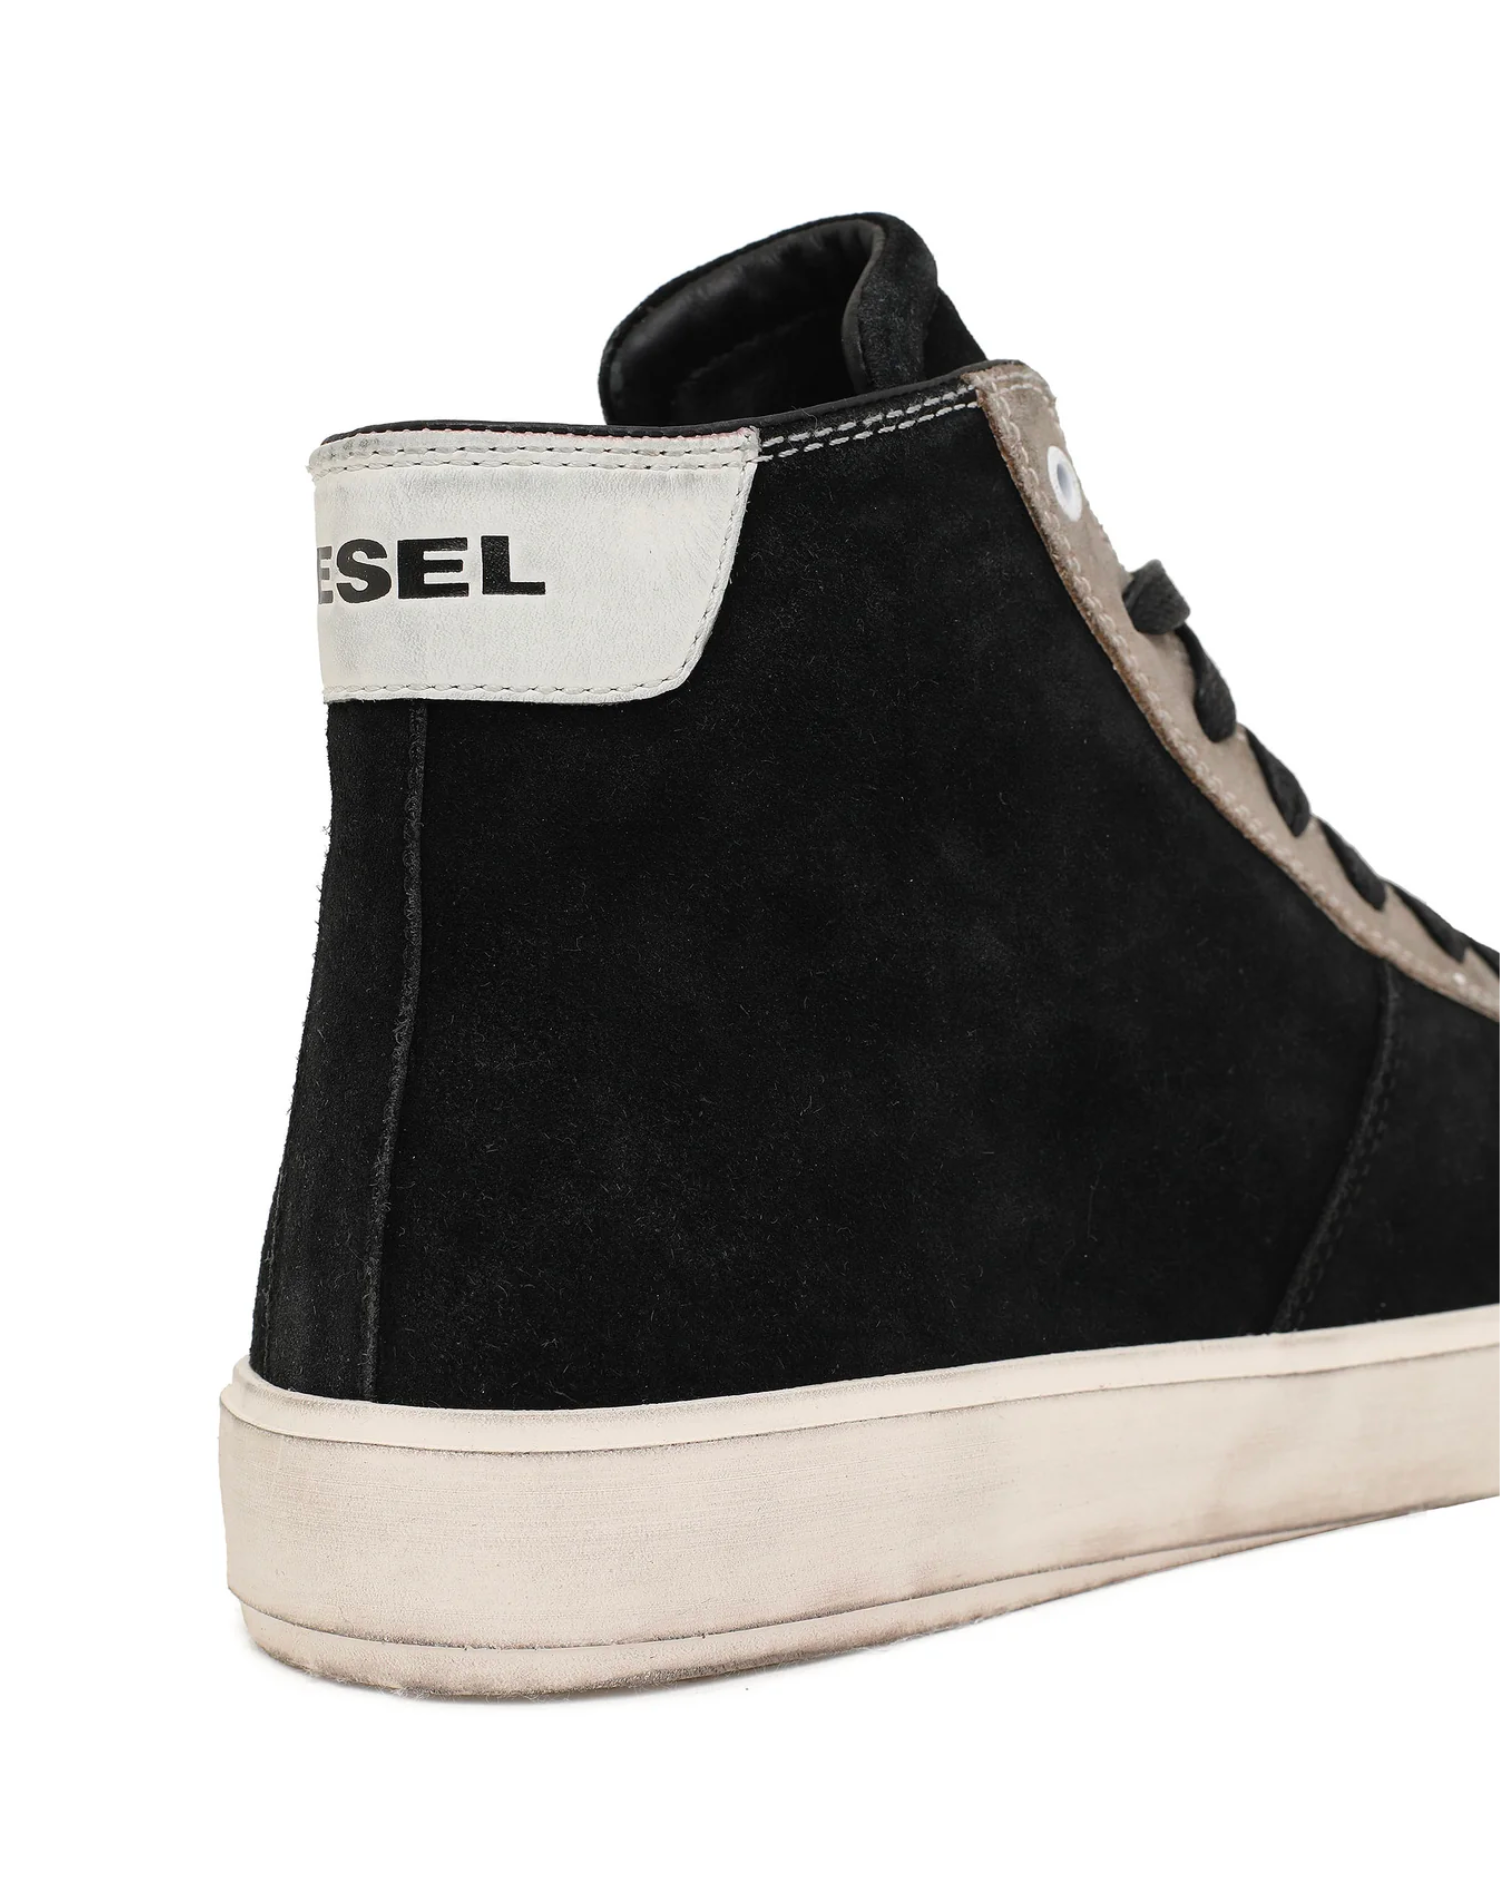 Diesel - S-Mydori Mid Cut Sneaker - Black/White